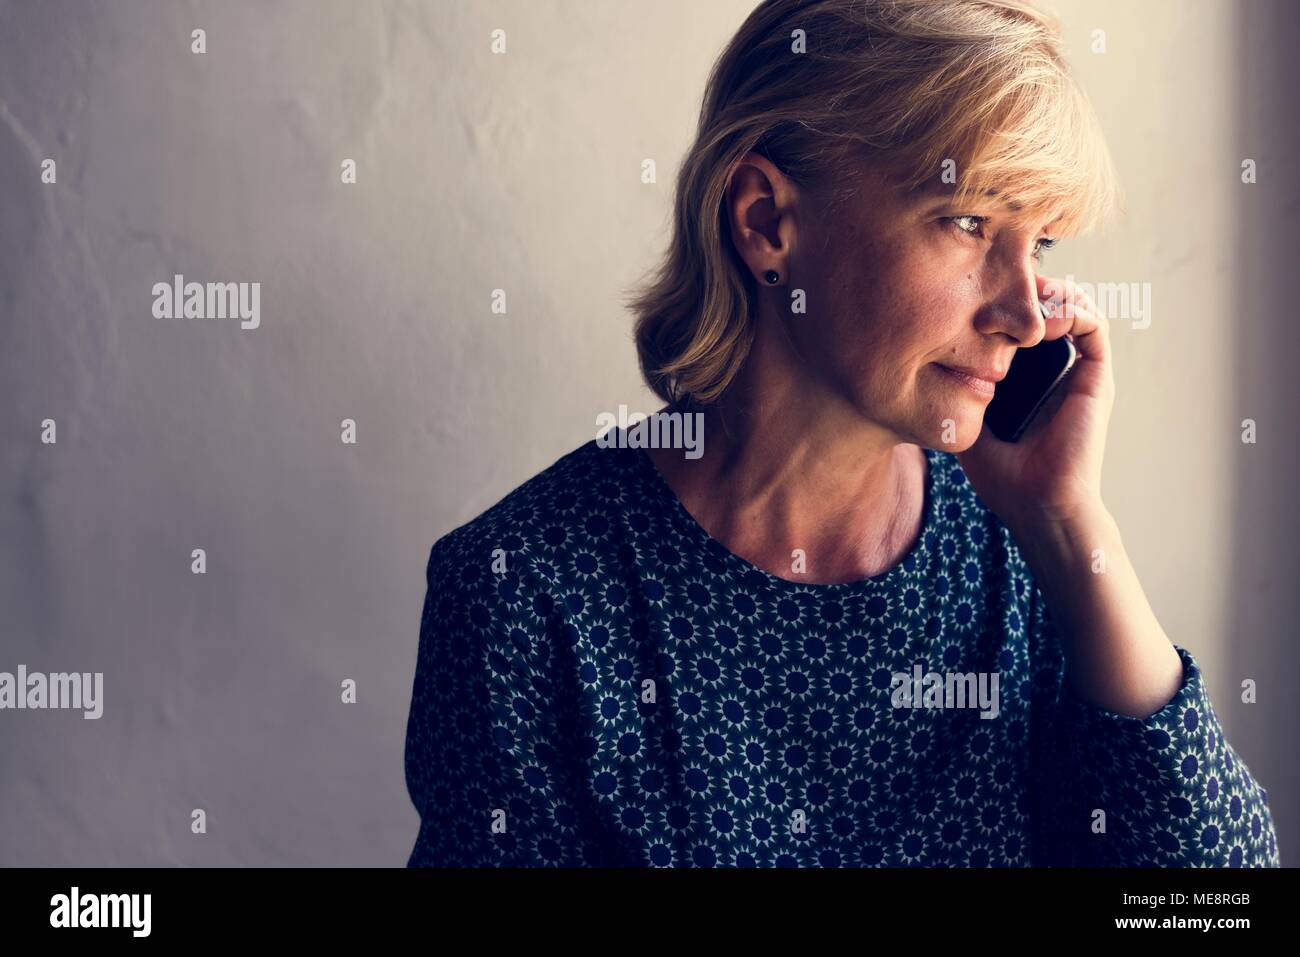 Closeup of caucasian woman using a mobile phone Stock Photo